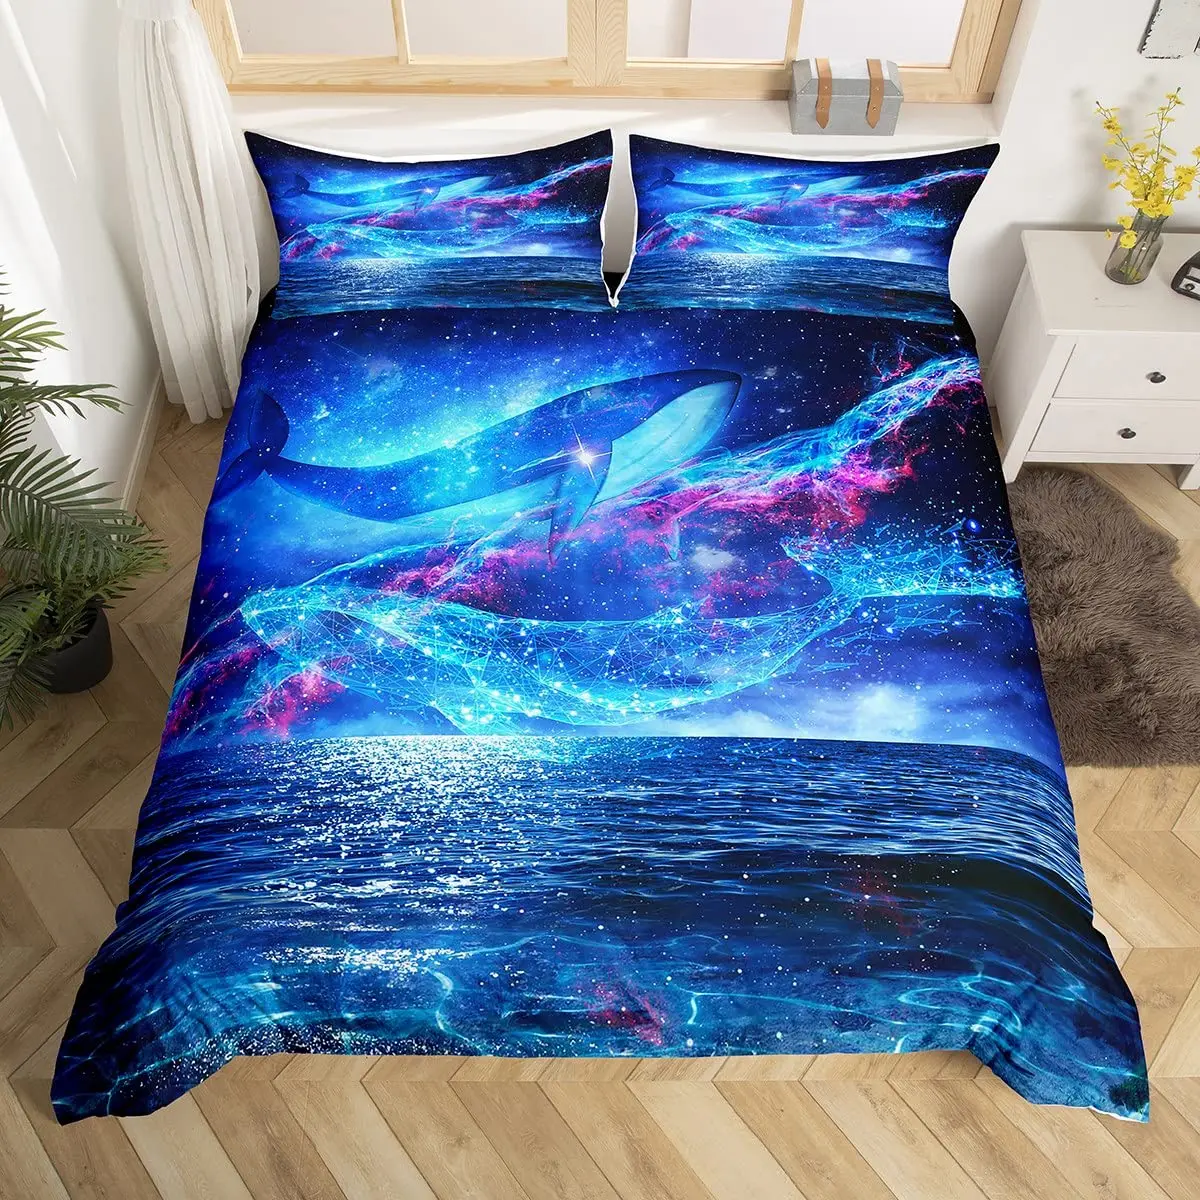 

Whale Duvet Cover Set Queen Size Starry Stars Universe Nebula Comforter Cover Blue Galaxy Ocean Theme Sea Creatures Bedding Set